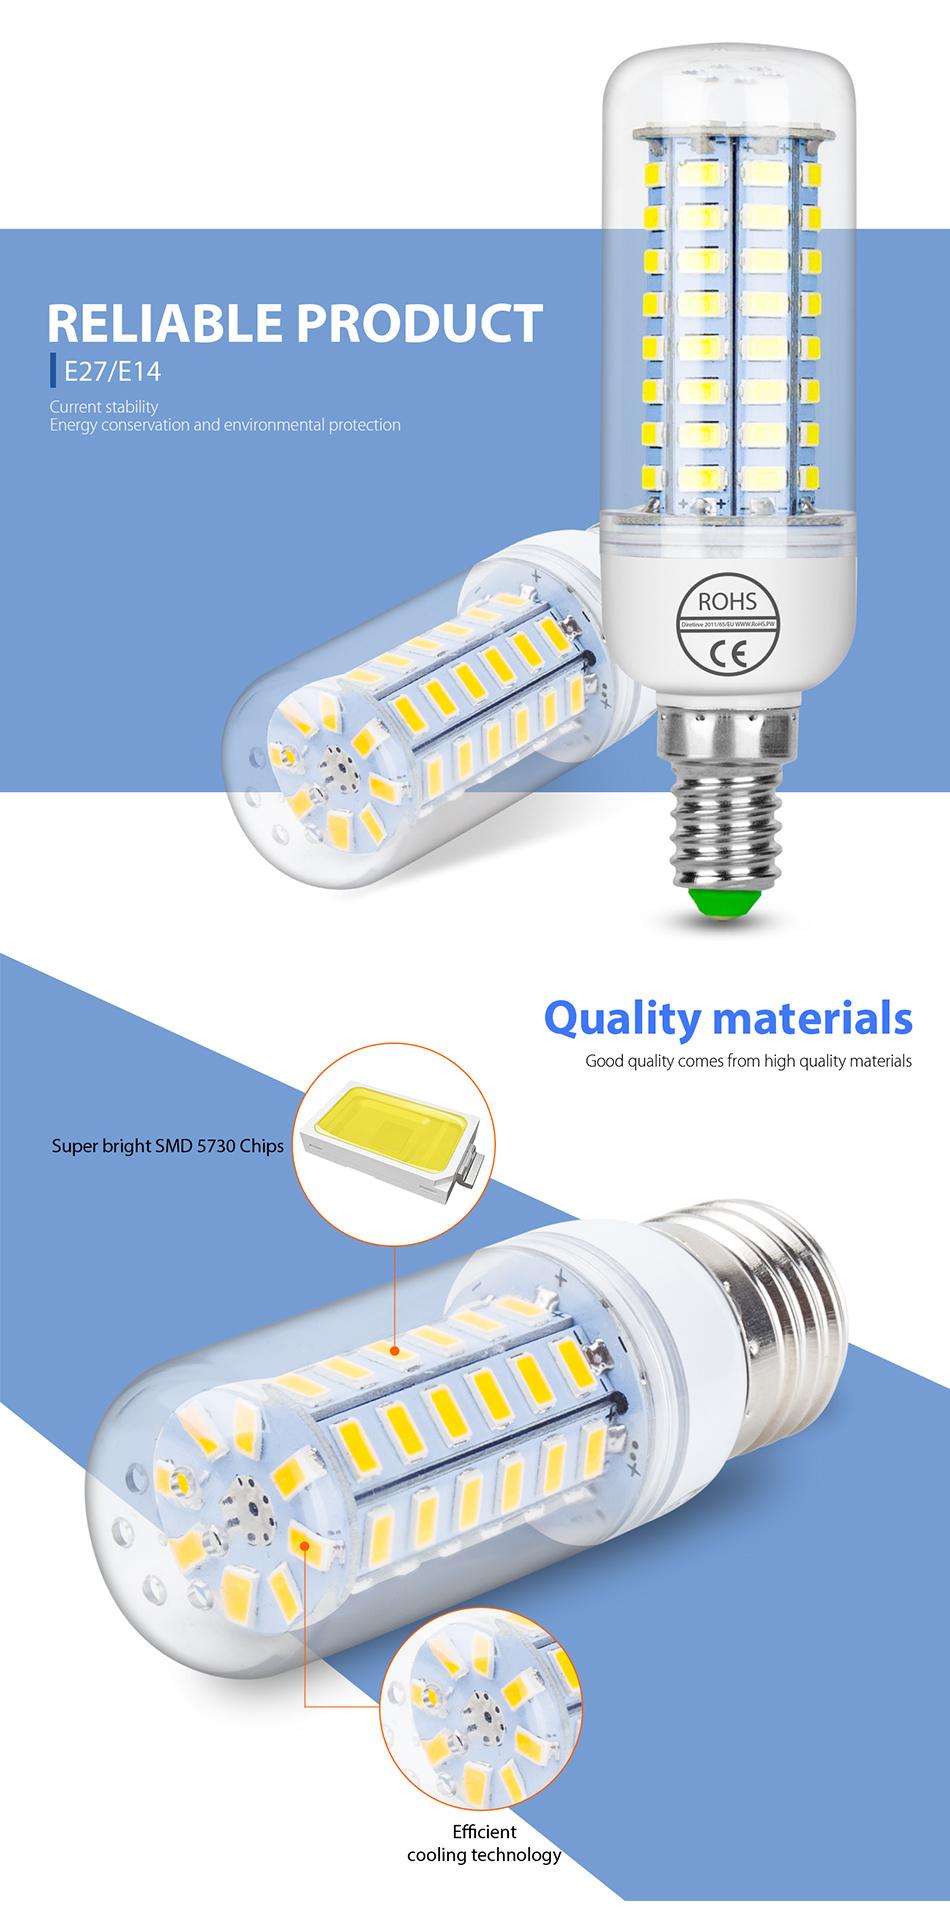 220V GU10 LED Lamp Bulb E14 LED Candle Light Bulb E27 Corn Lamp G9 LED 3W 5W 7W 9W 12W 15W Bombilla B22 Chandelier Lighting 240V